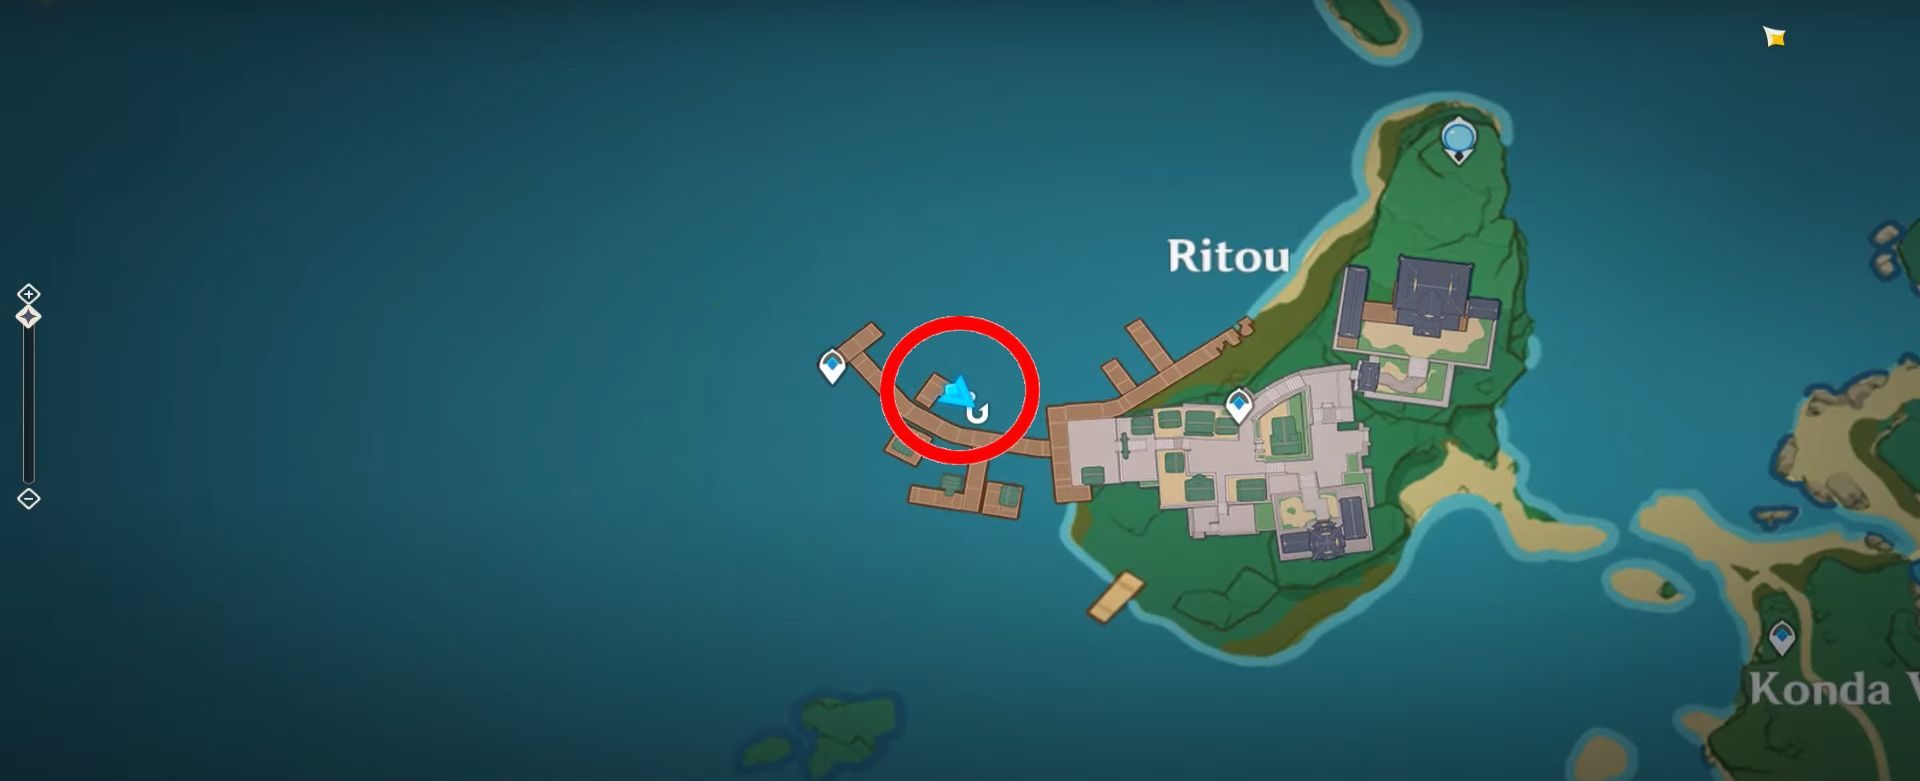 genshin-impact-ritou-pufferfish-spawn-location-7610865